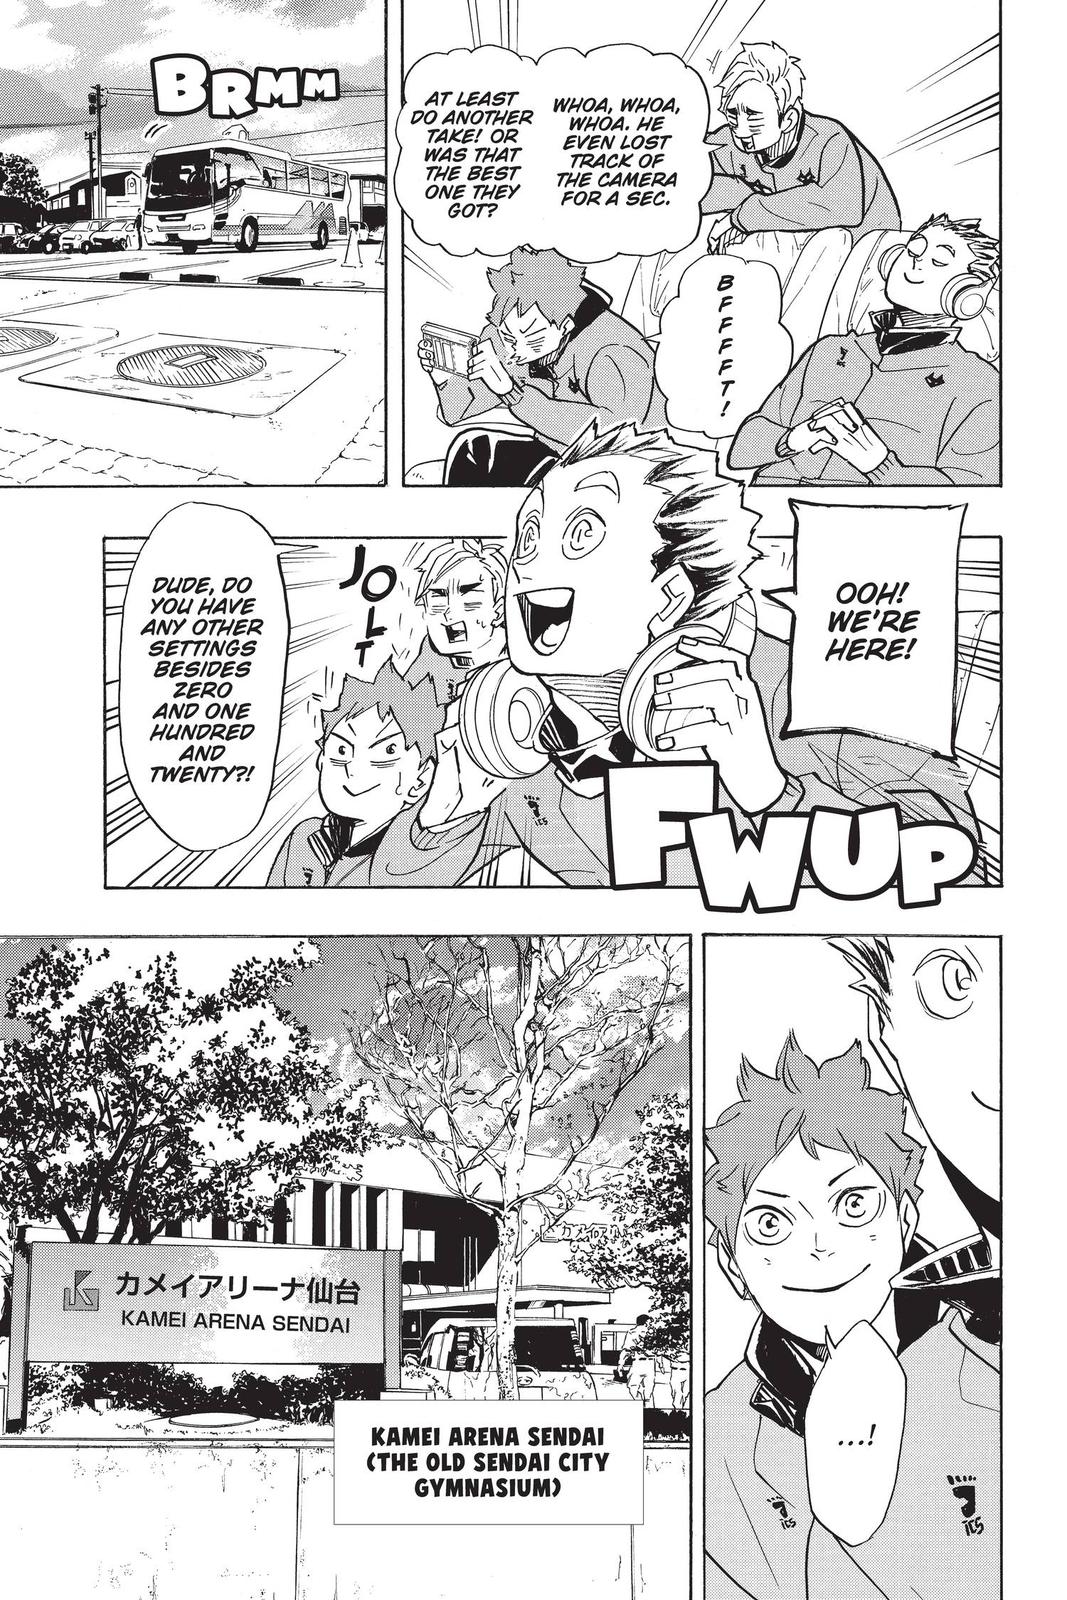 Haikyuu!!, Chapter 313 - To never give up is easier said than done - Haikyuu!!  Manga Online